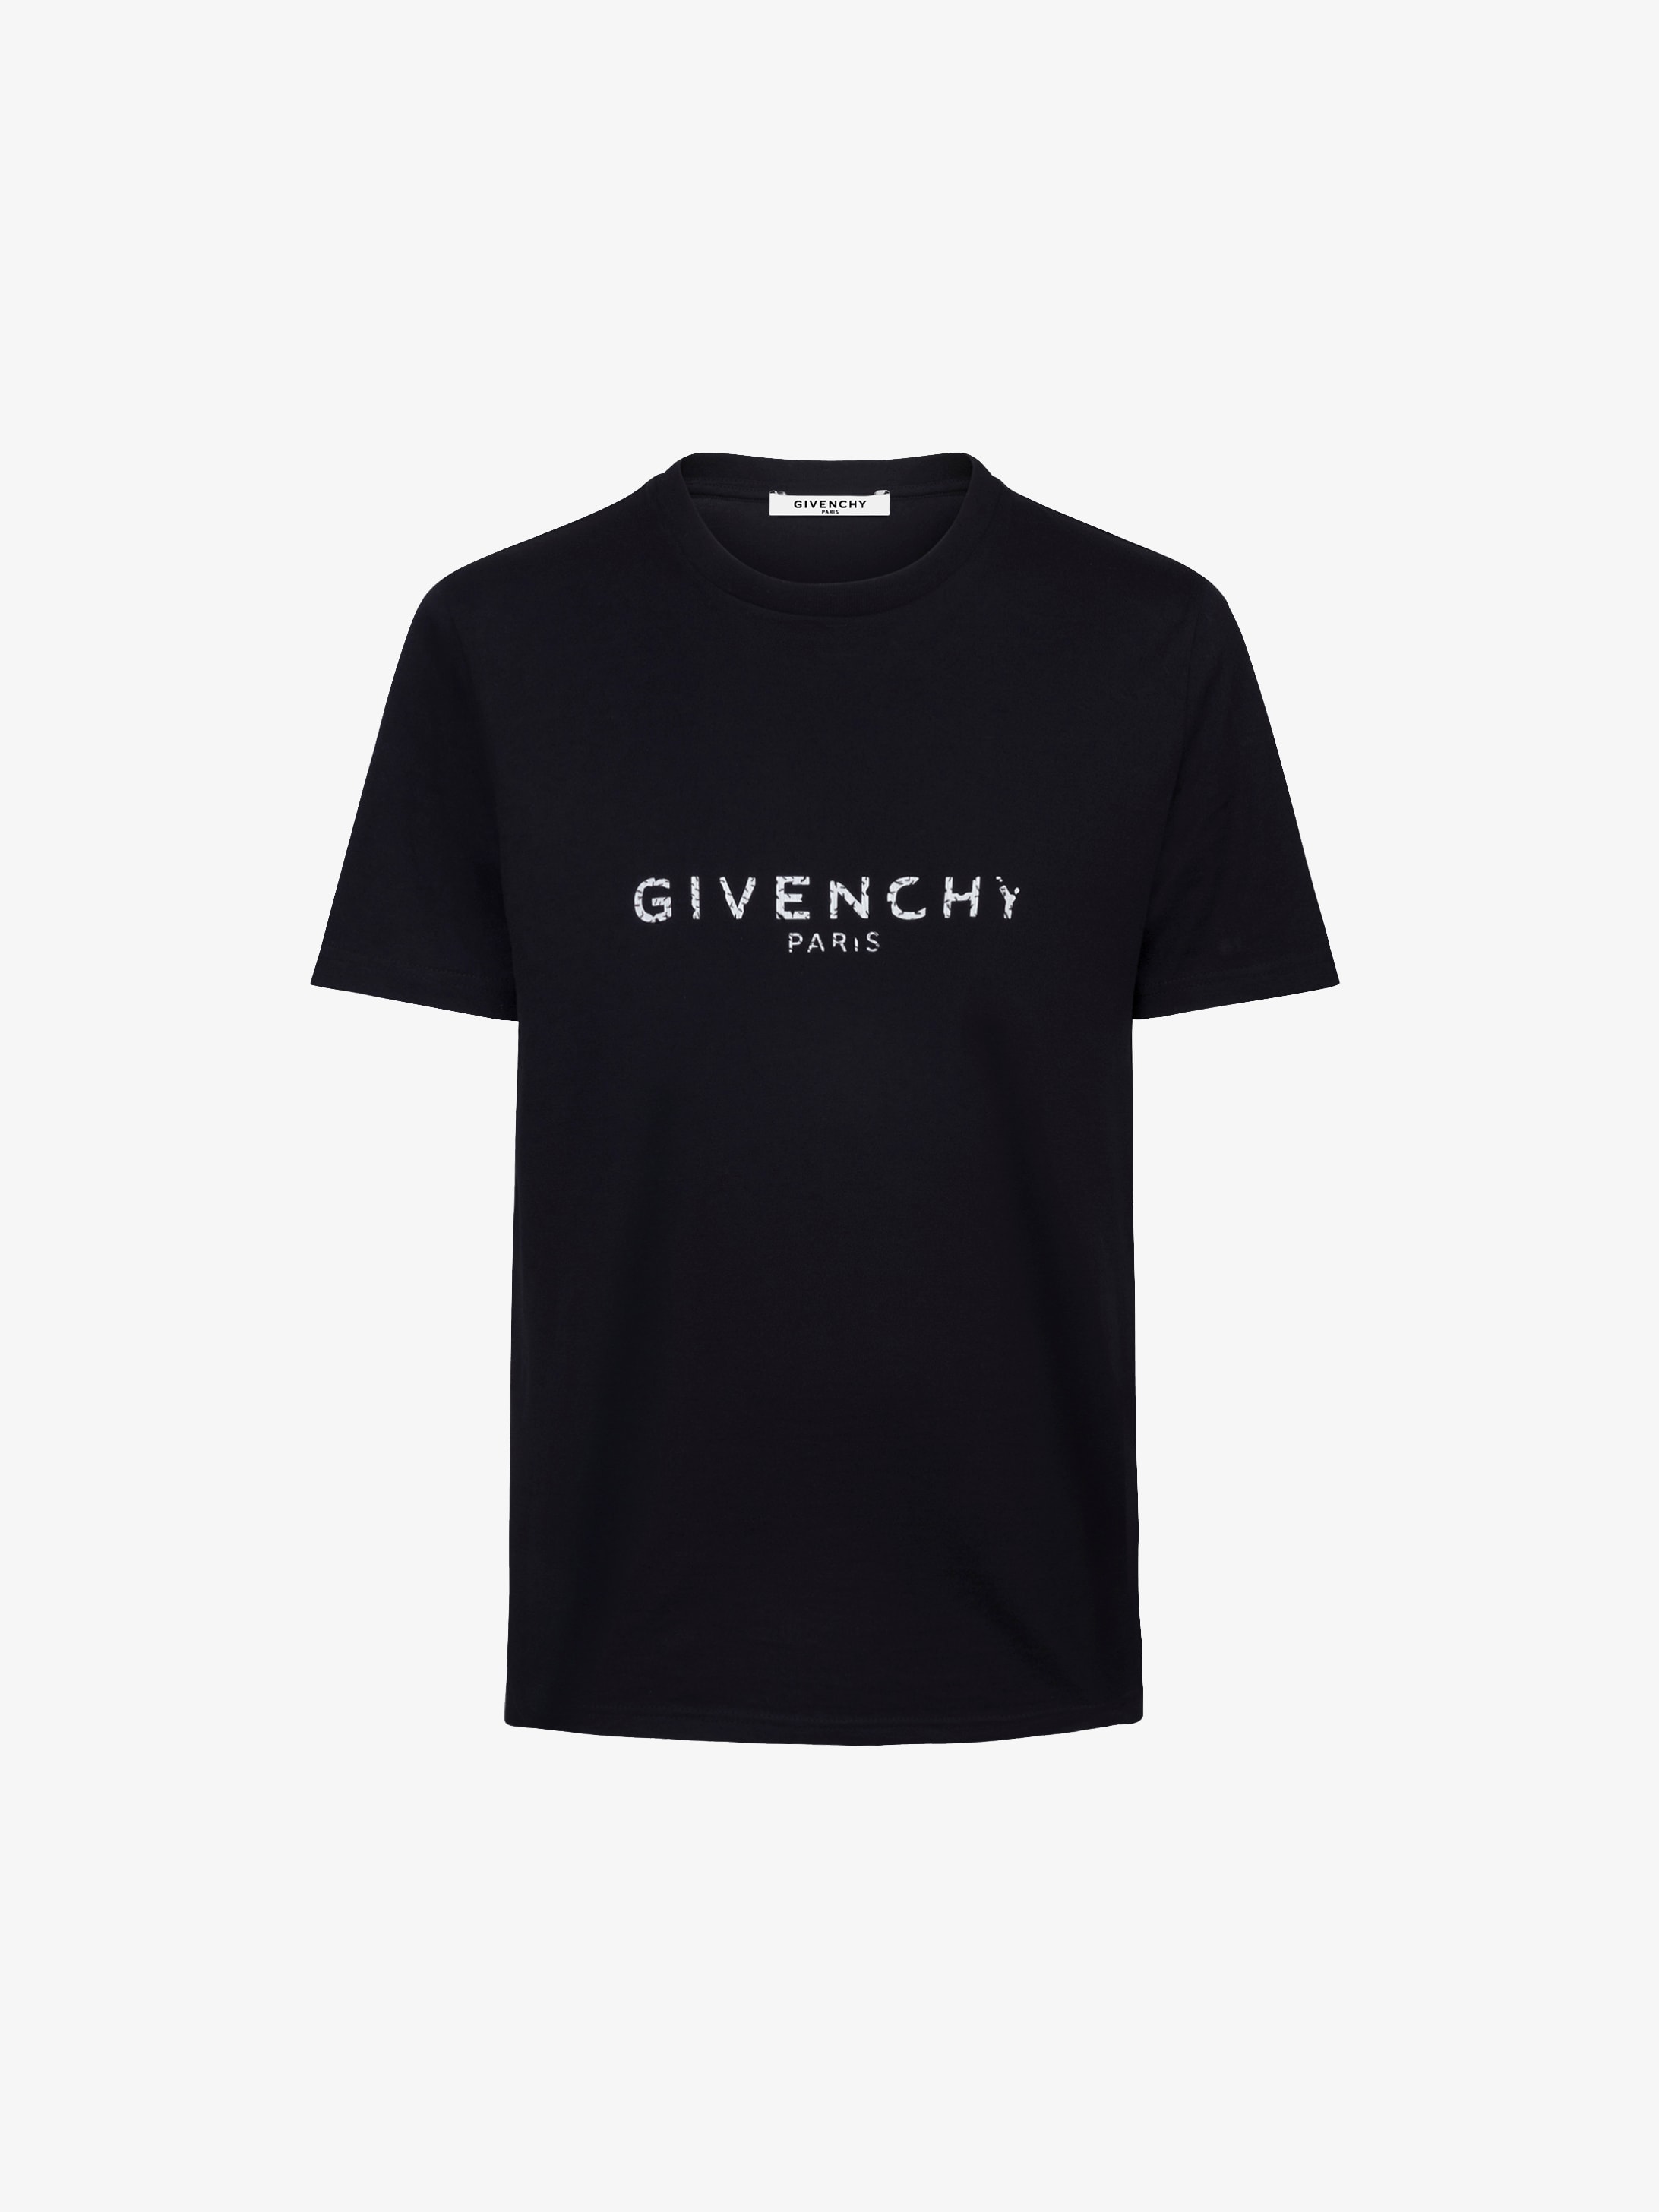 Blurred GIVENCHY PARIS T-shirt | GIVENCHY Paris